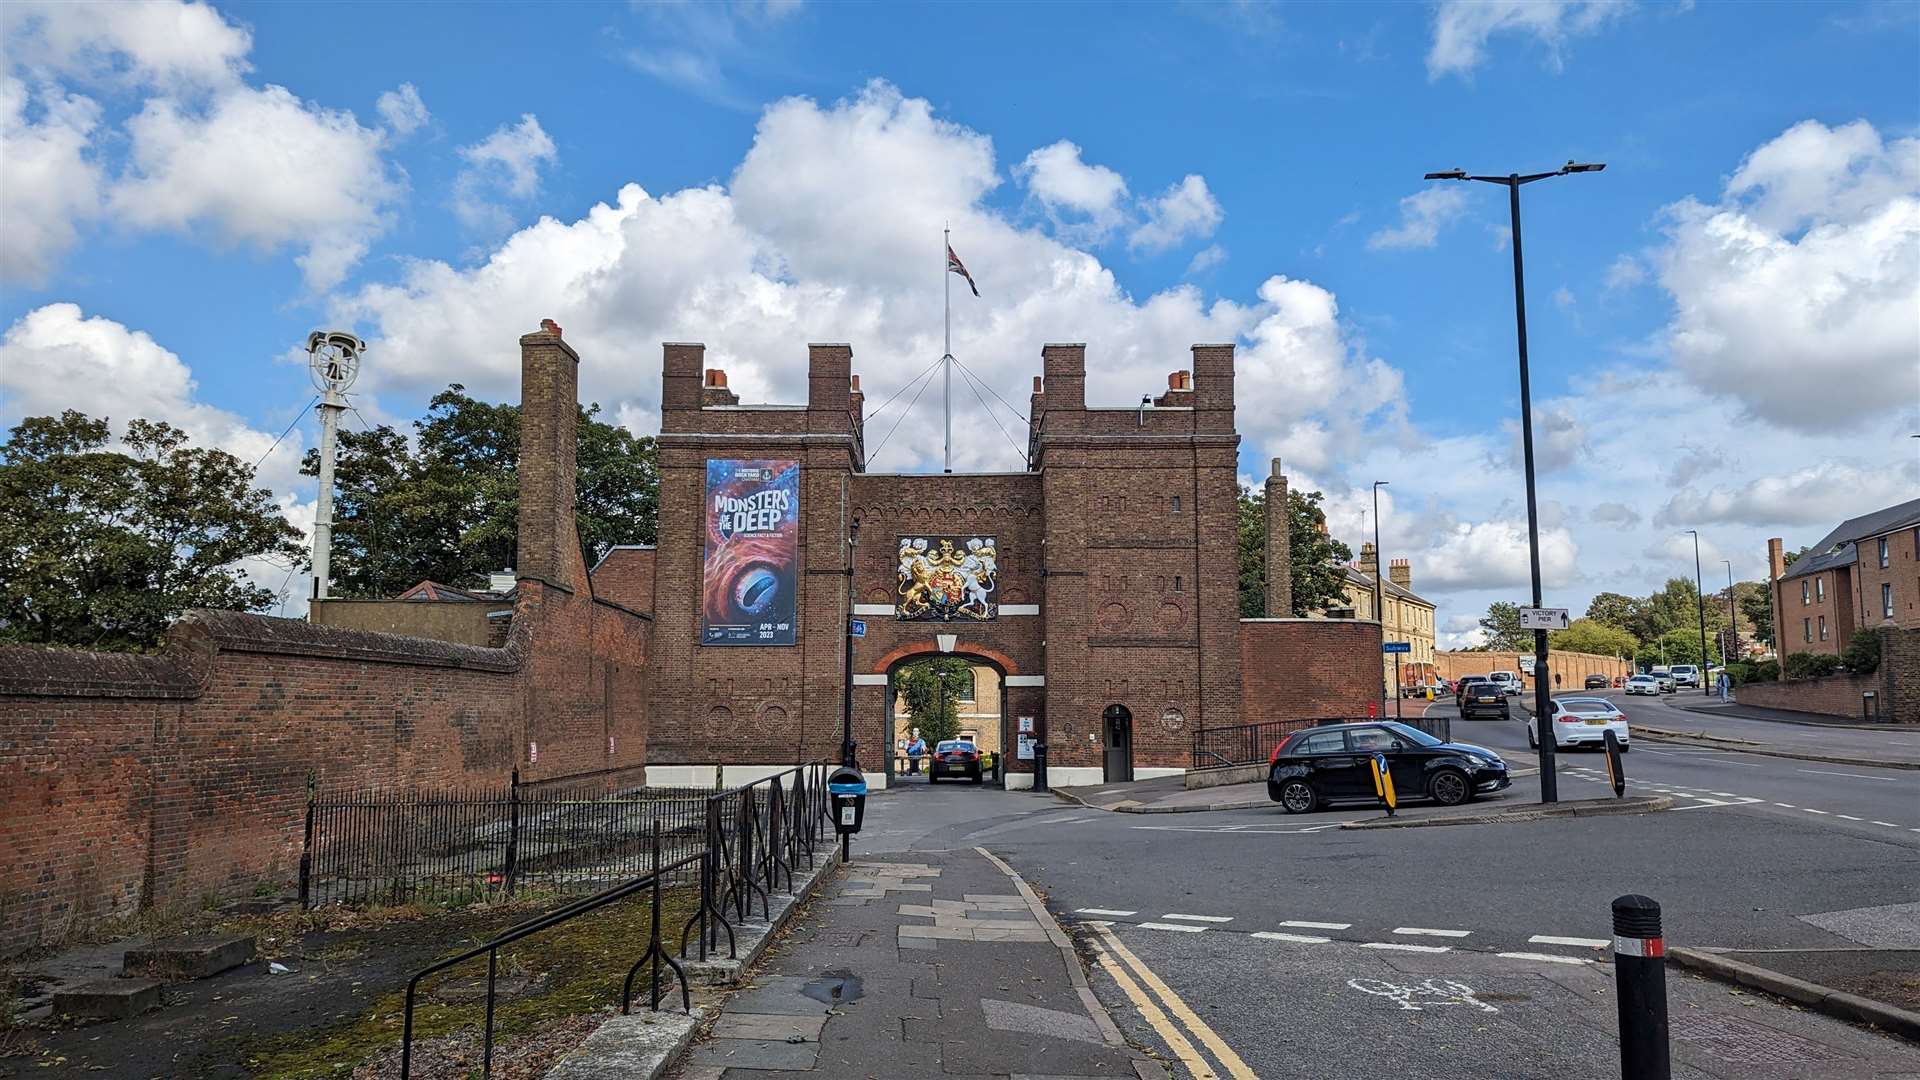 The Main Gate at Chatham Dockyard